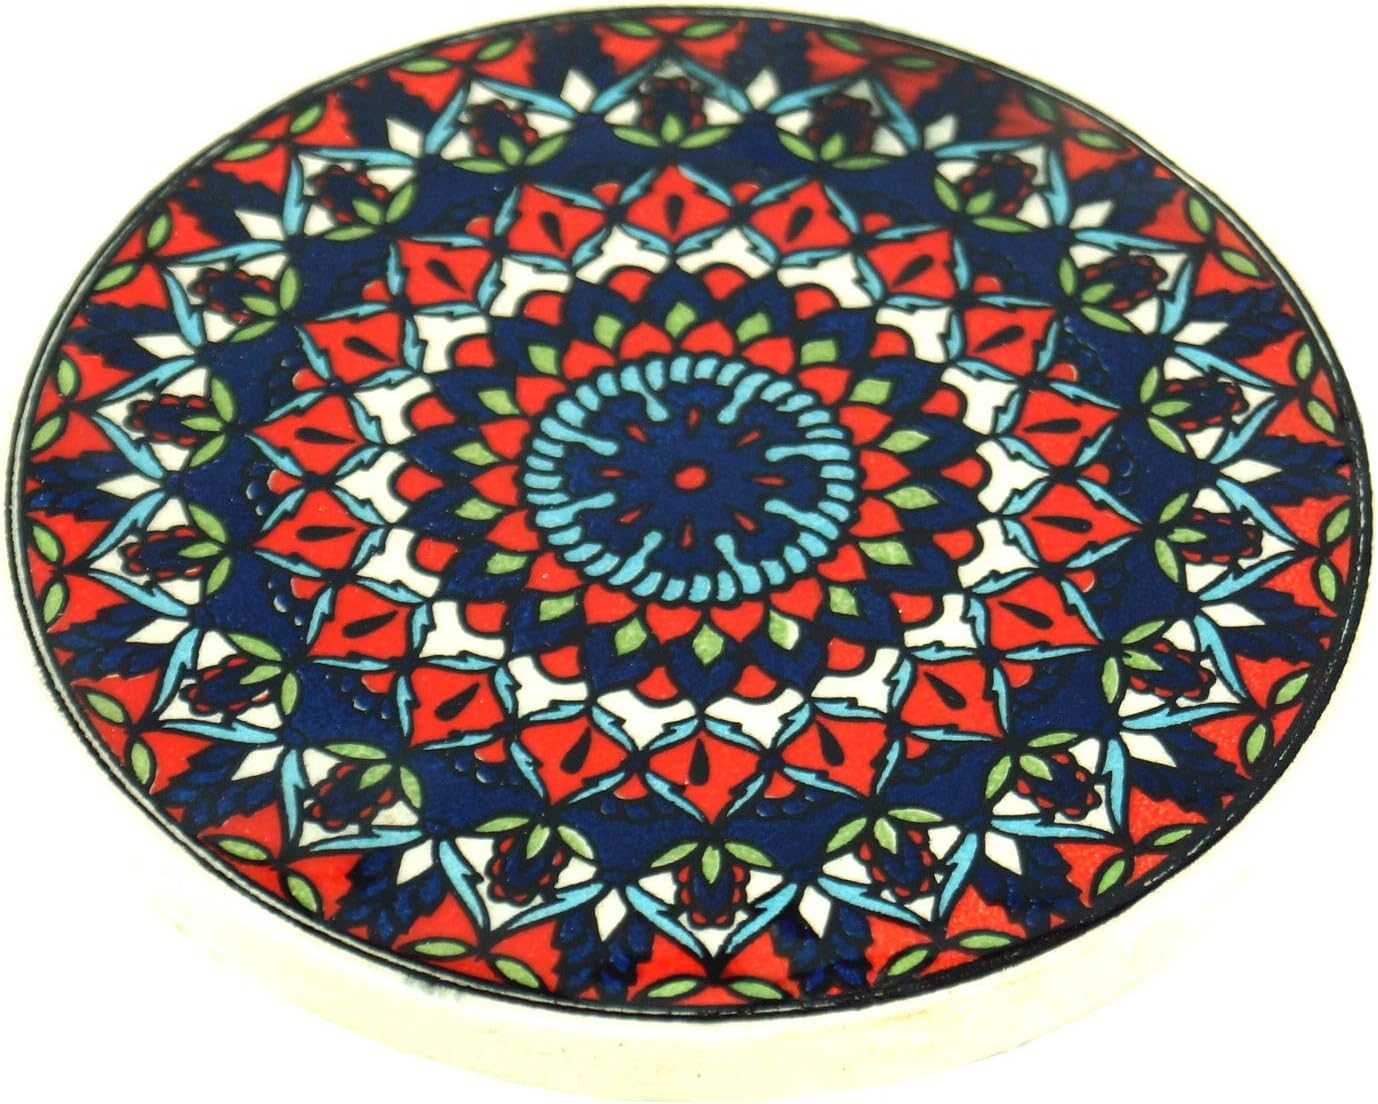 Guru-Shop GURU SHOP Oriental Ceramic Coasters, Round Coasters for Glasses, Cups with Mandala Motif Set - Pattern 1, Blue, Quantity: Set of 3, 1 x 8 x 8 cm, Coasters, Trays